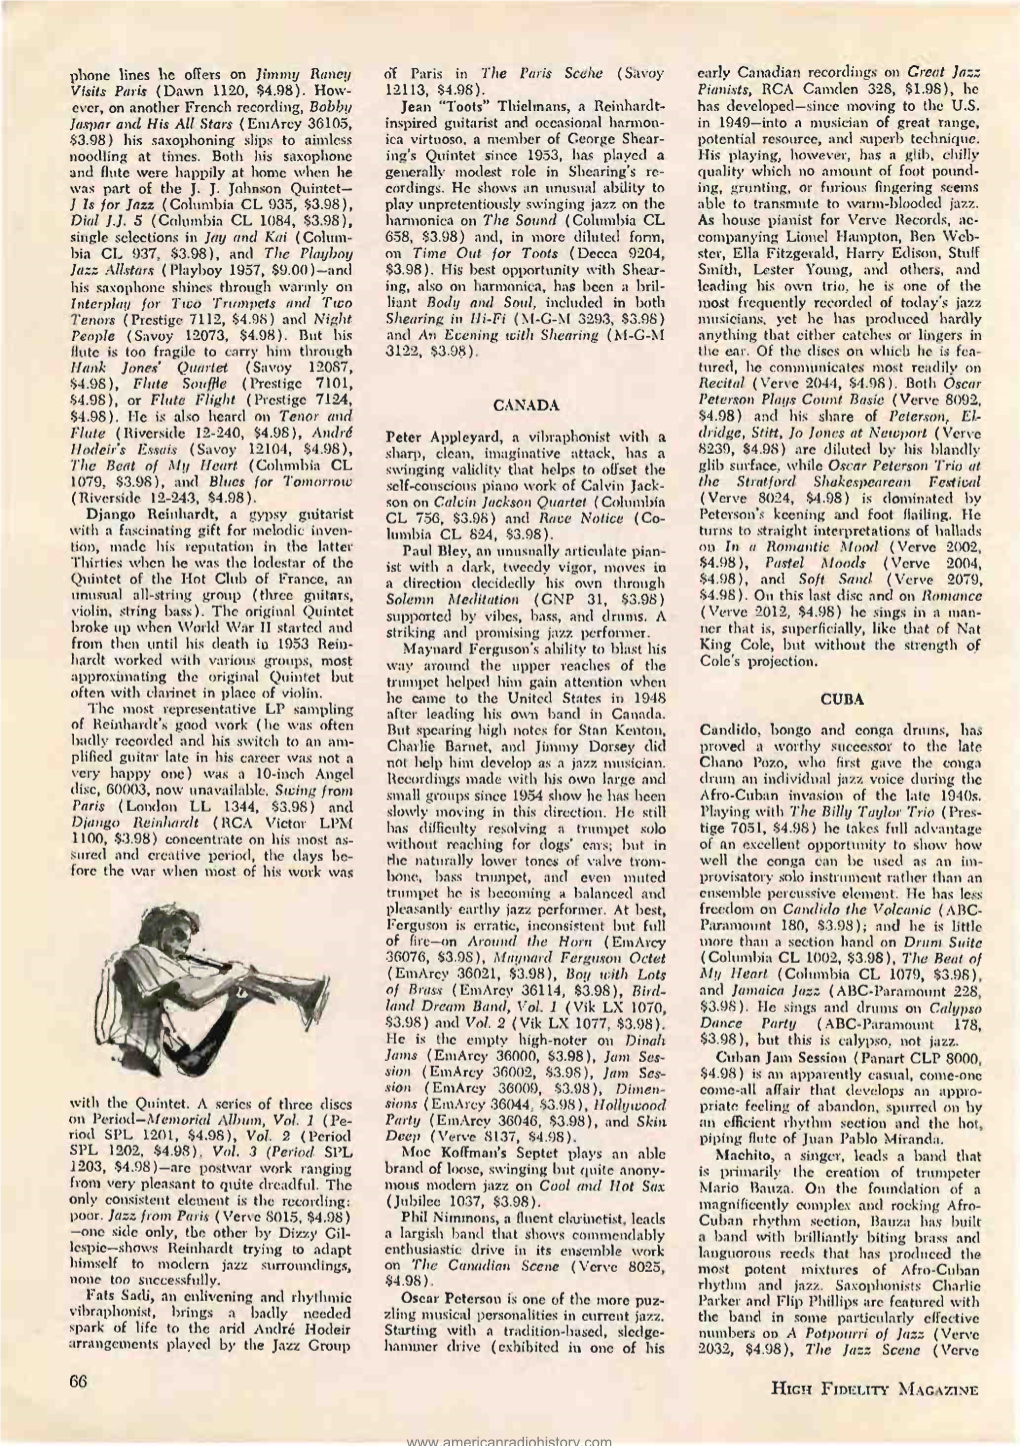 Higjh Fidelity Magazine August 1958